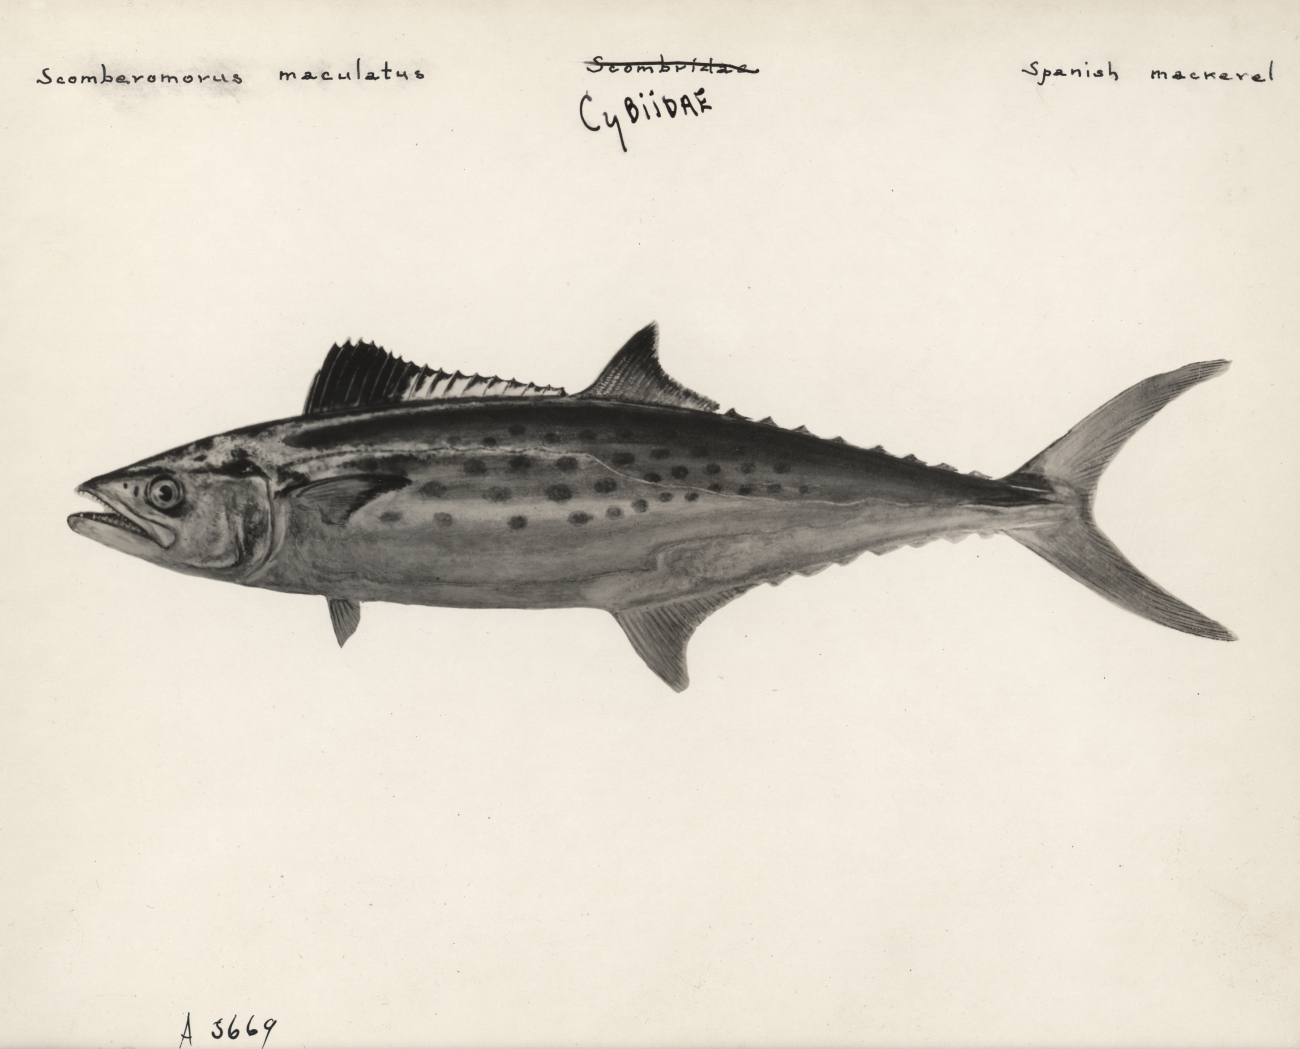 Spanish mackerel (Scomberomorus maculatus)